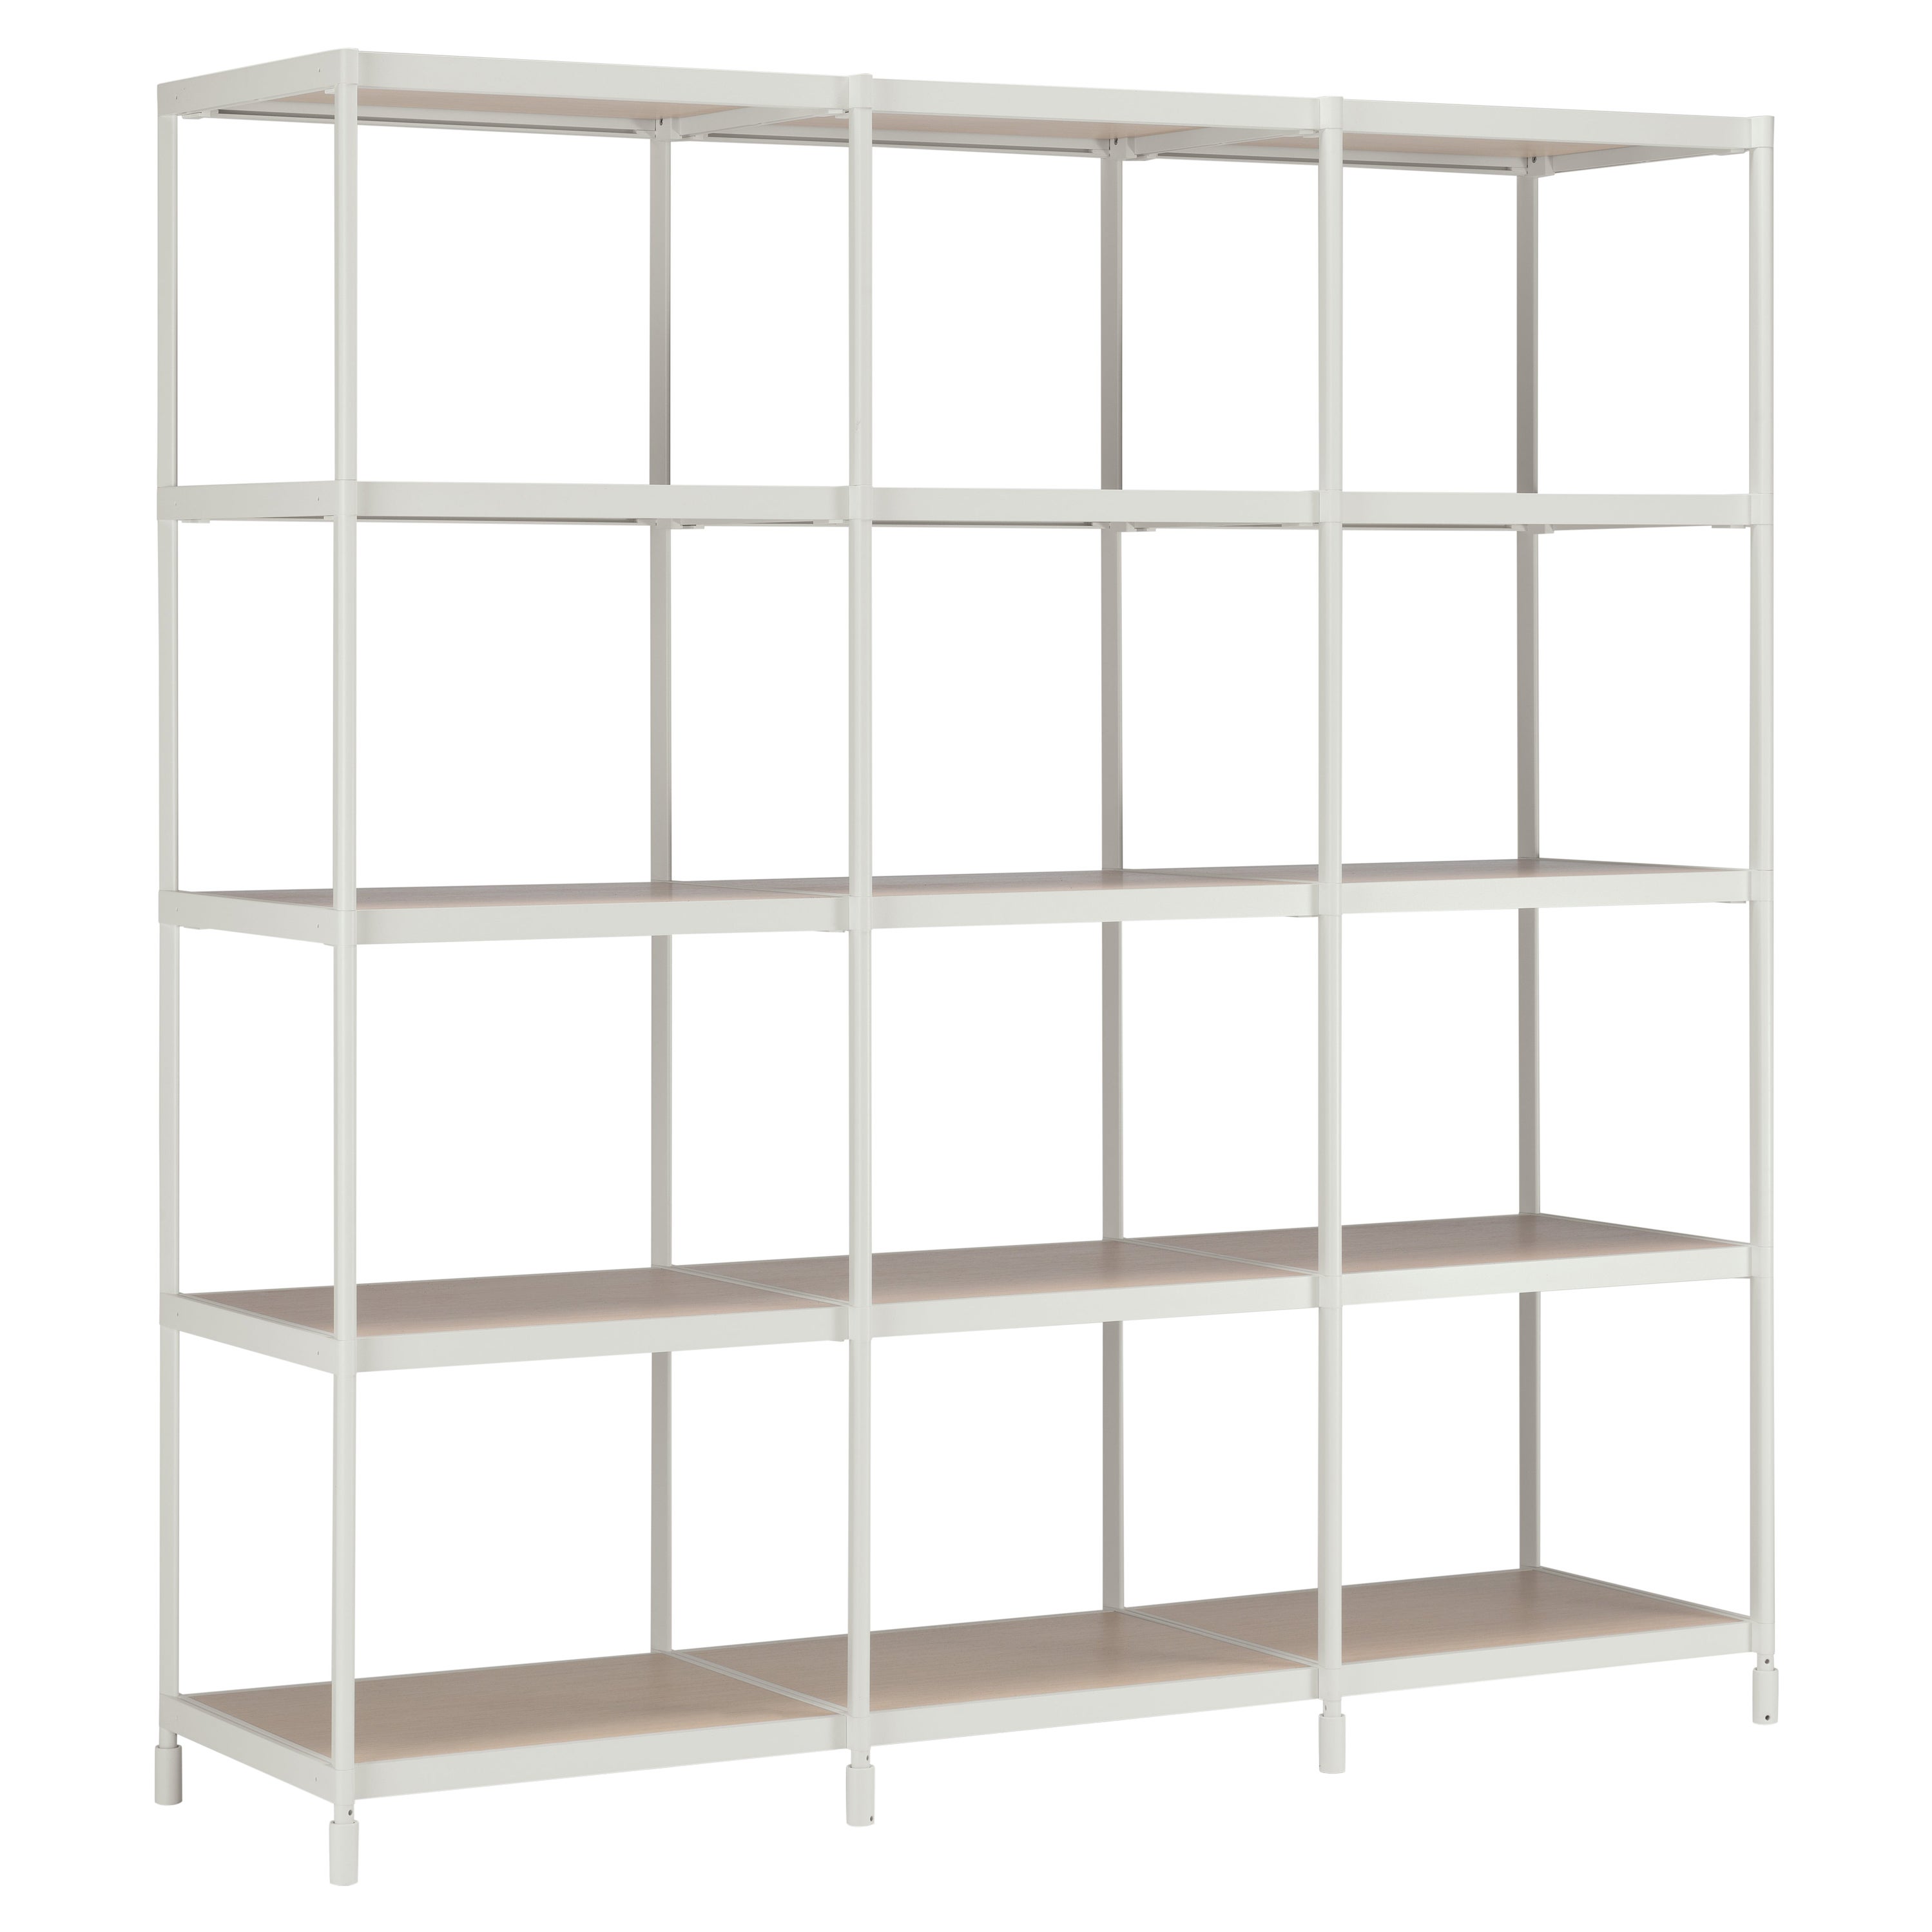 Alias SEC LIB005 Bookshelf in Natural Oak with White Lacquered Metal Shelves For Sale